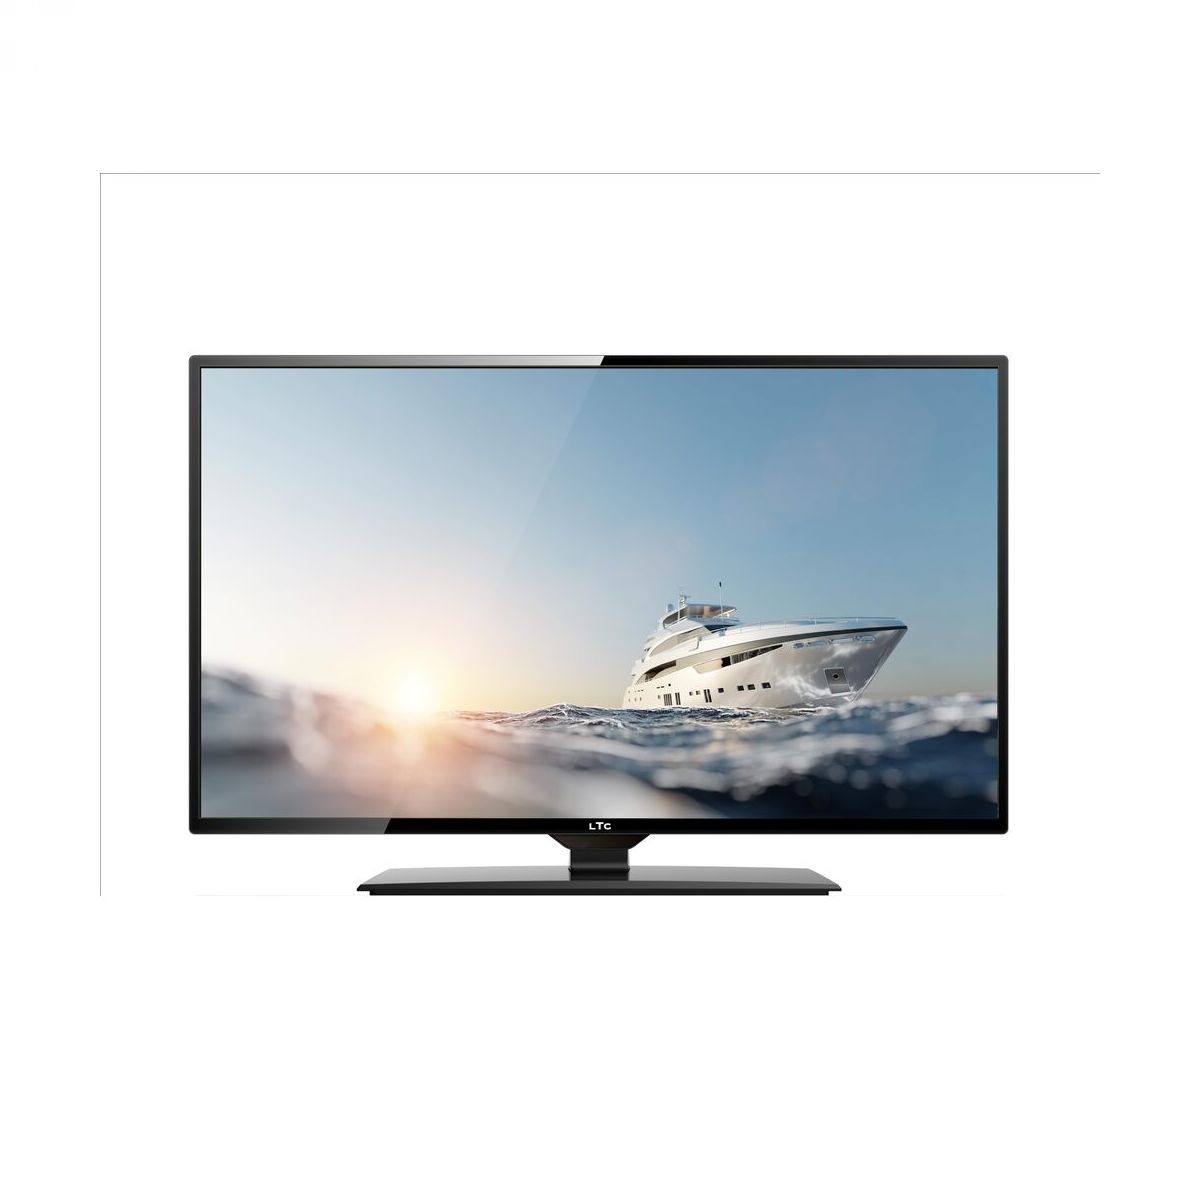 LTC 3209 Smart LED TV 12V 32” Full HD Android